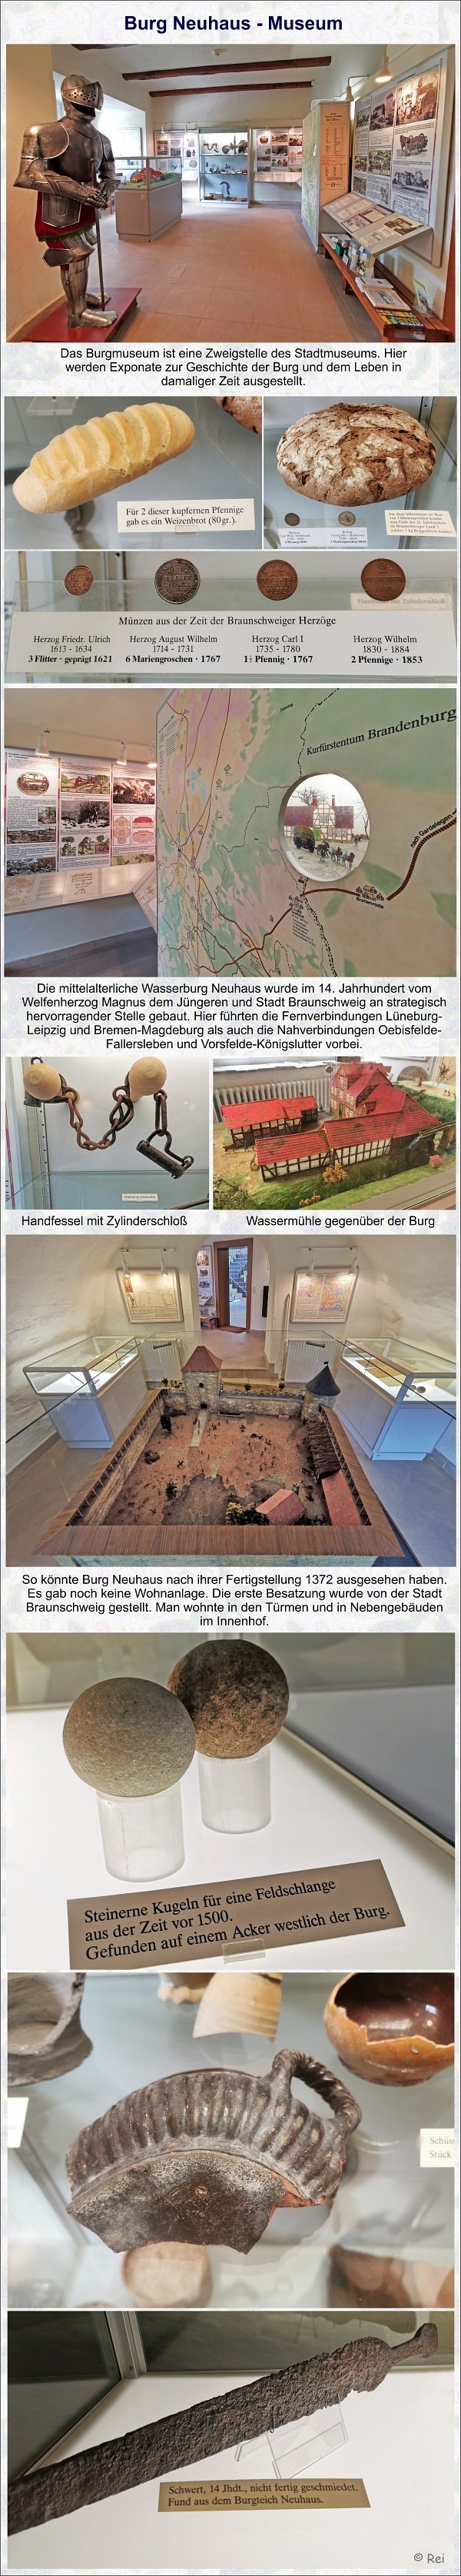 Burg Neuhaus Museum